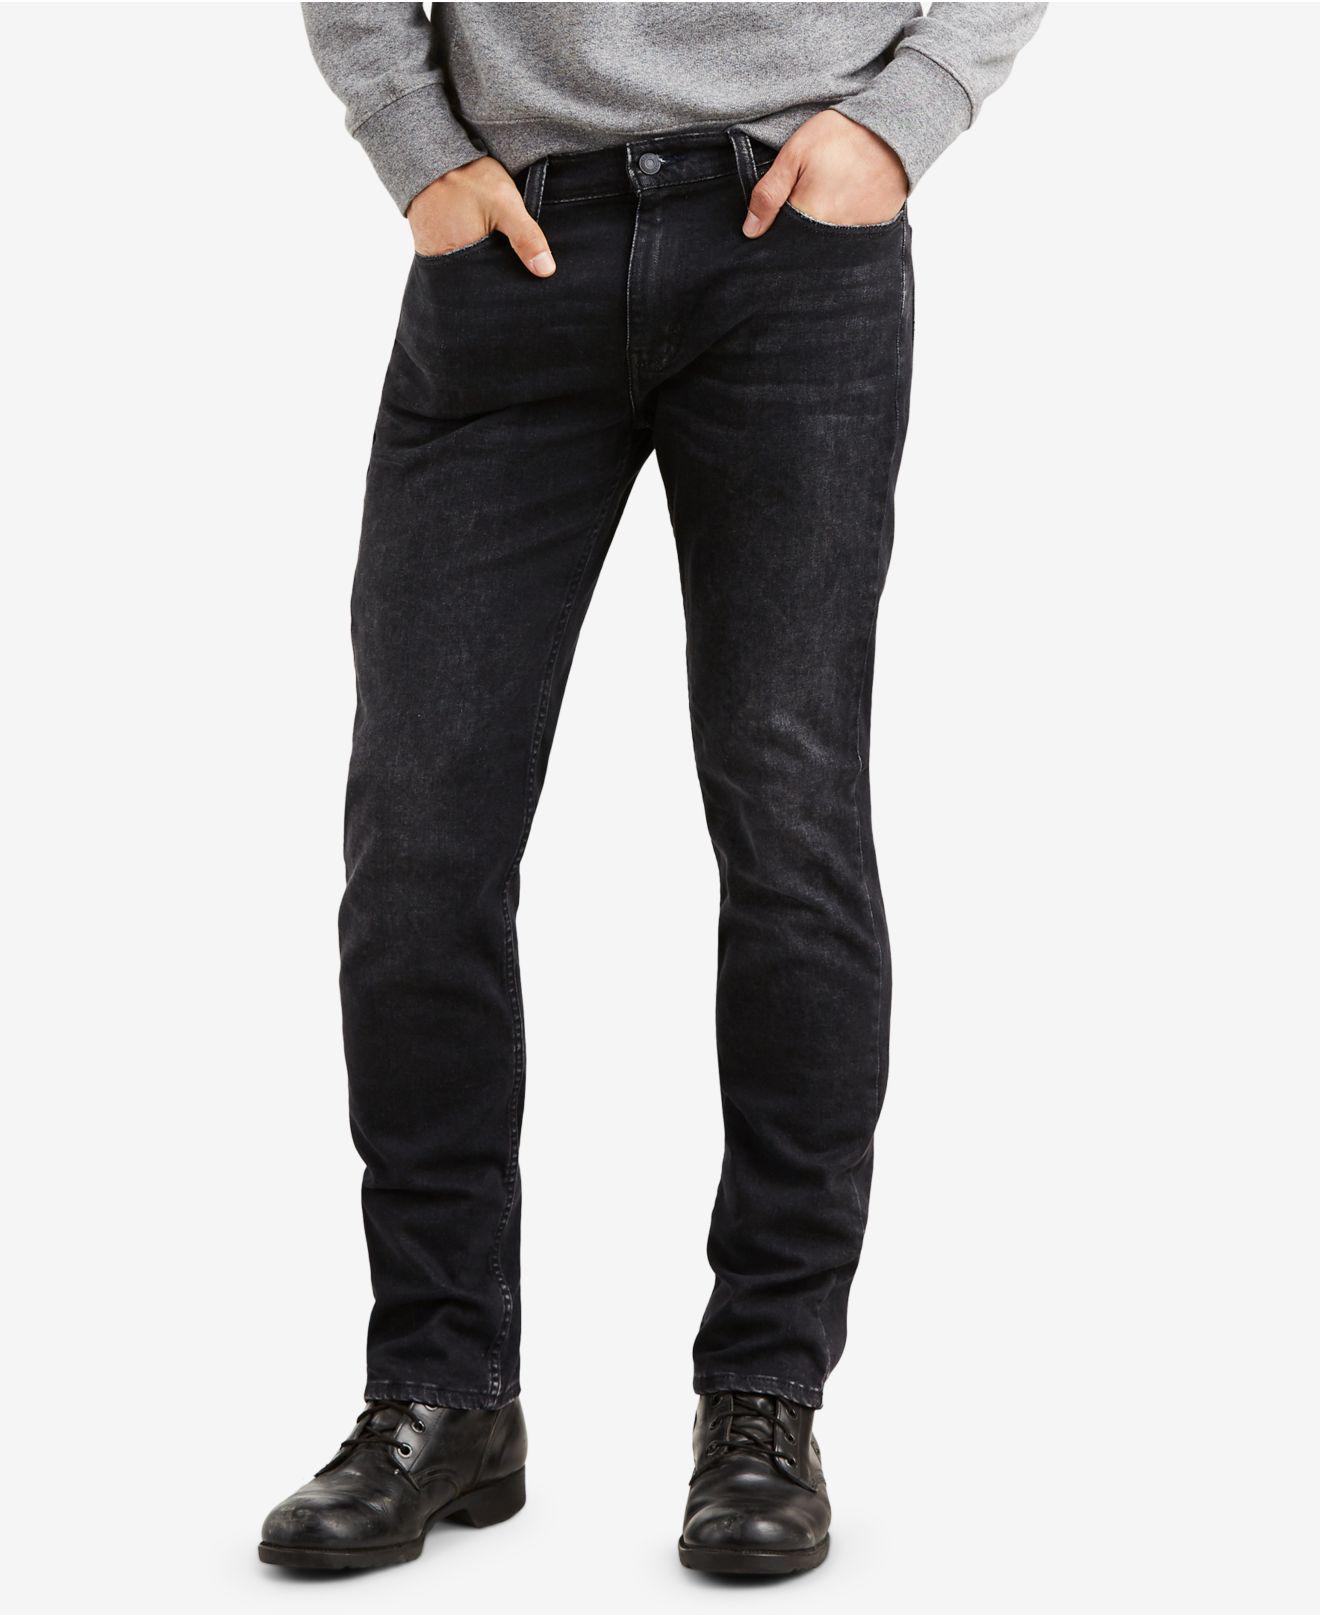 Levi's Denim 511tm Slim Fit Jeans in Black for Men - Save 17% - Lyst